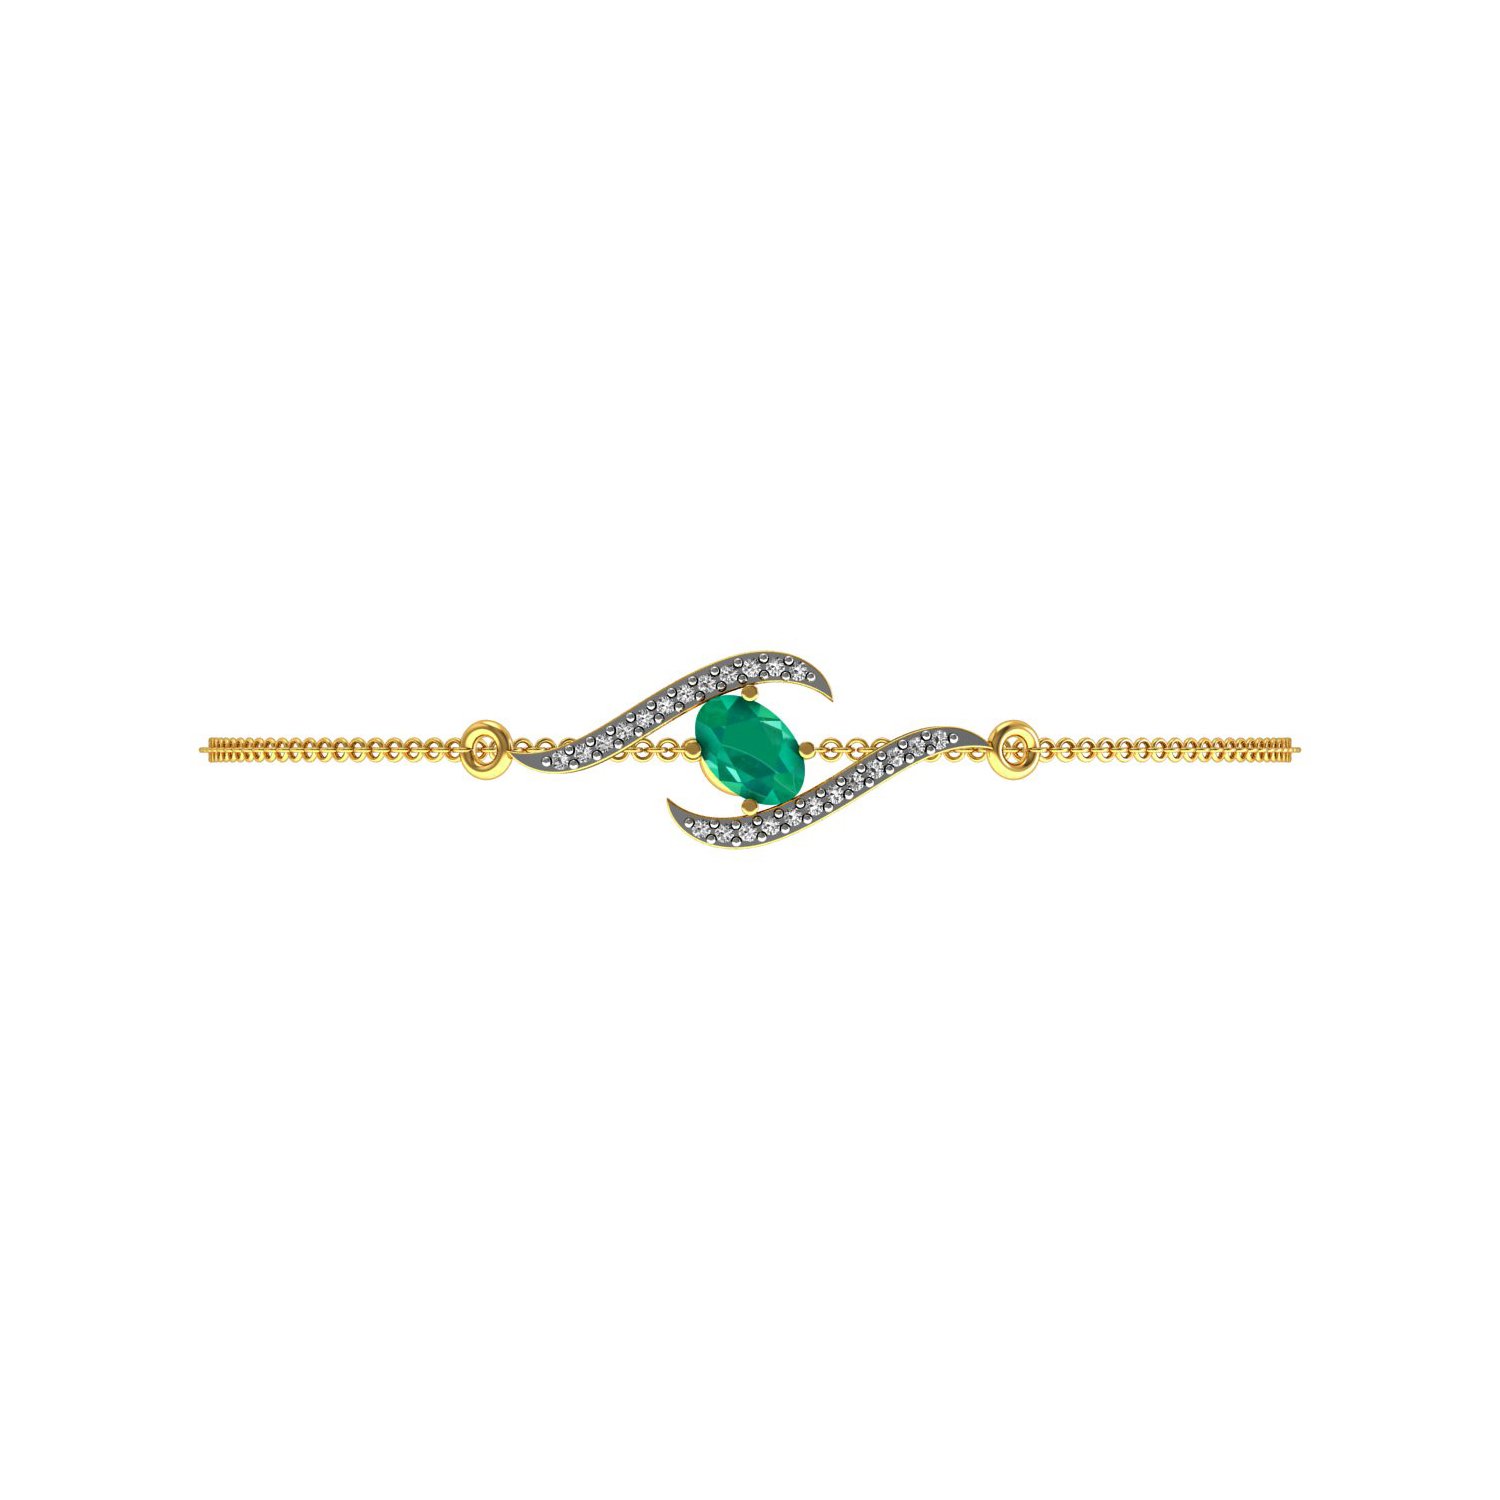 Solid gold diamond emerald chain bracelet